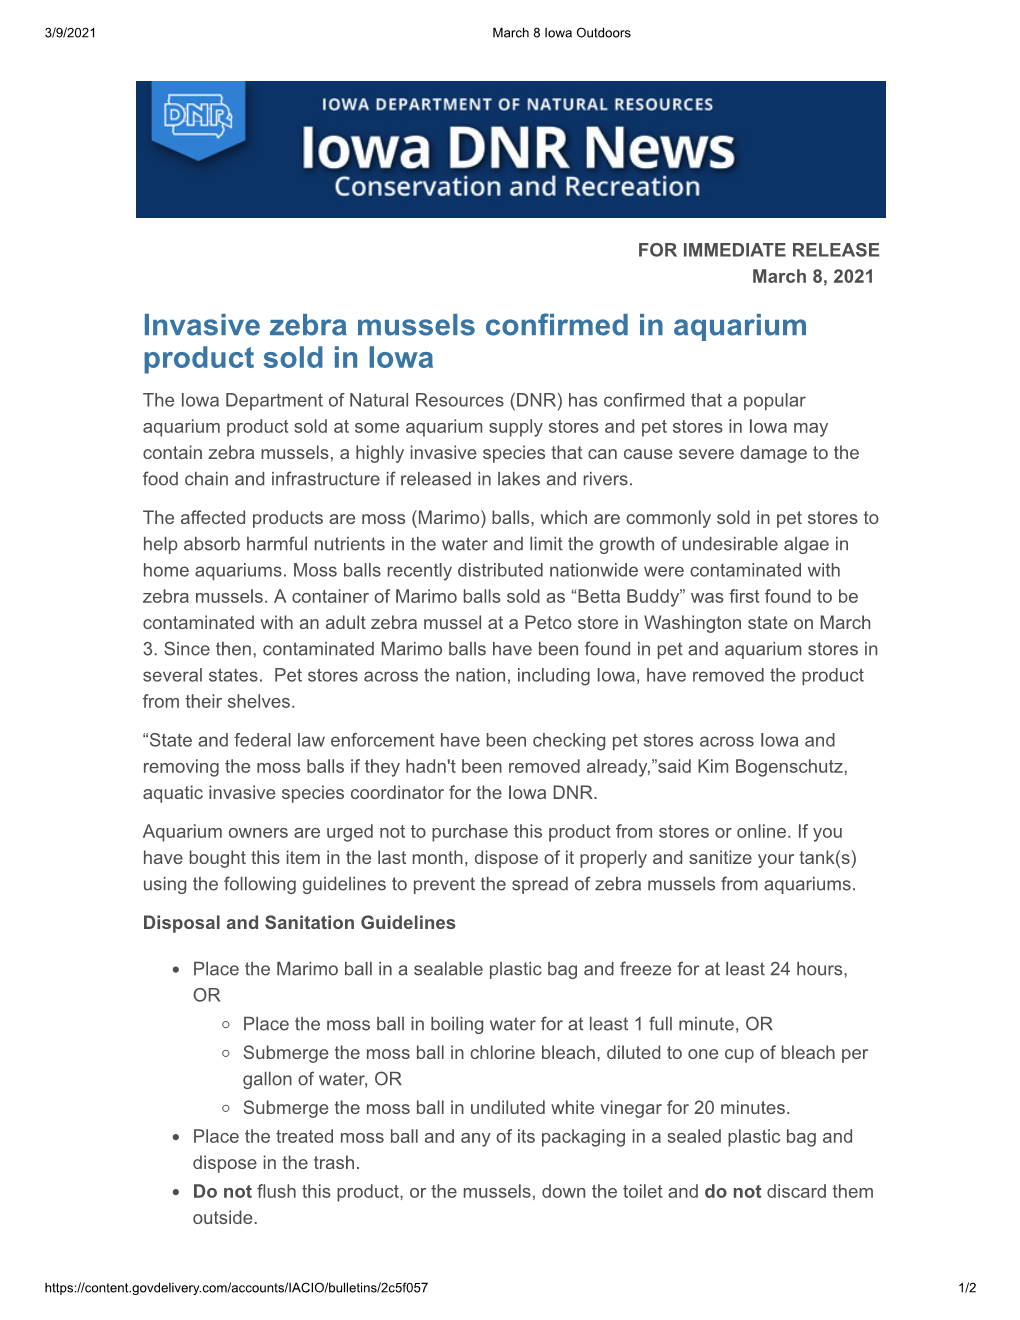 Invasive Zebra Mussels Confirmed in Aquarium Product Sold in Iowa